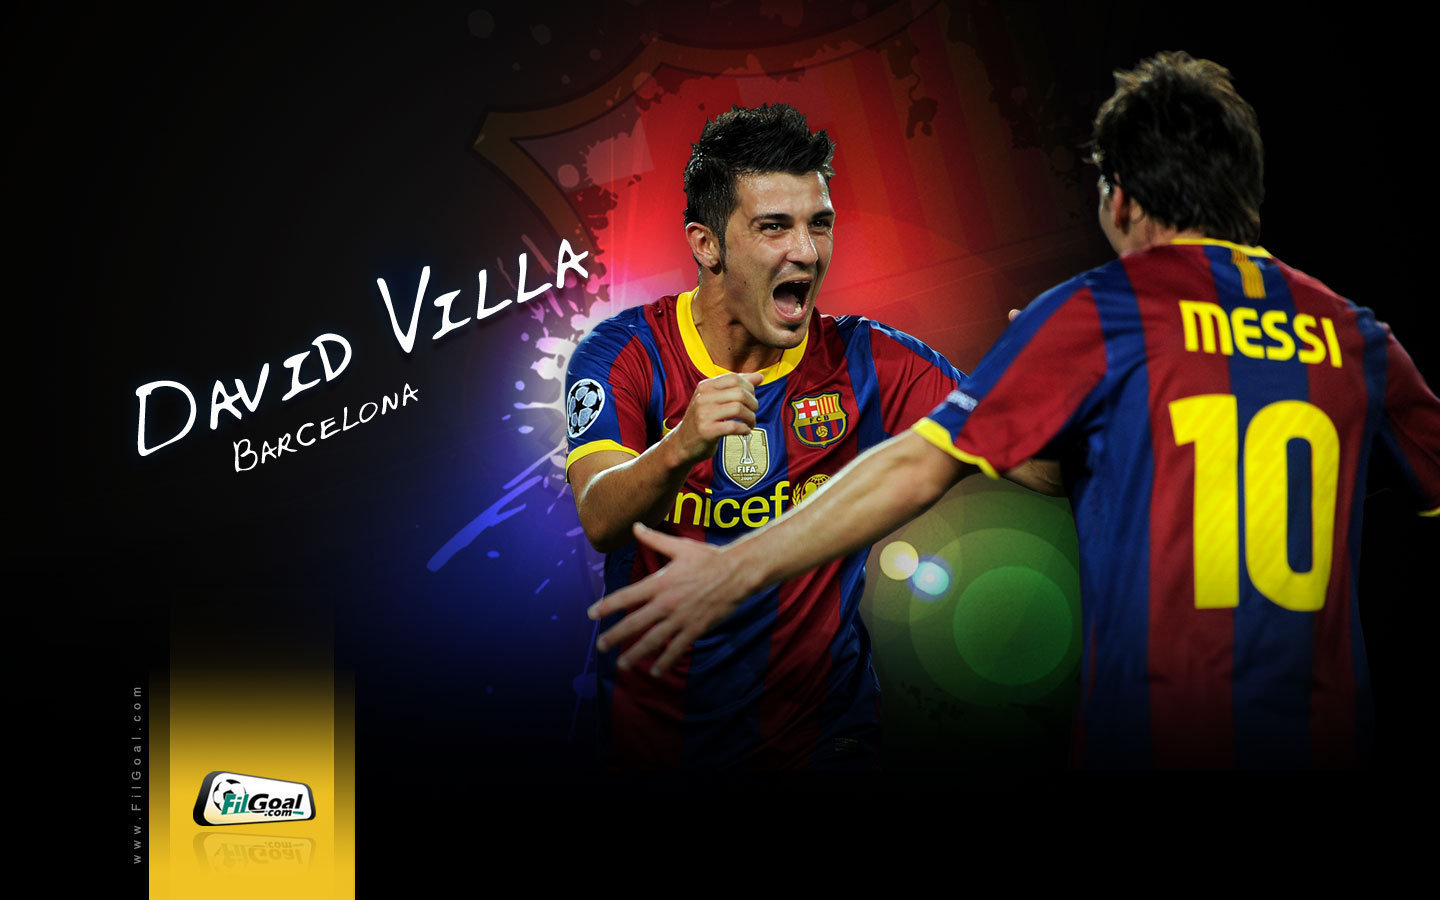 David Villa Fc Barcelona Wallpaper